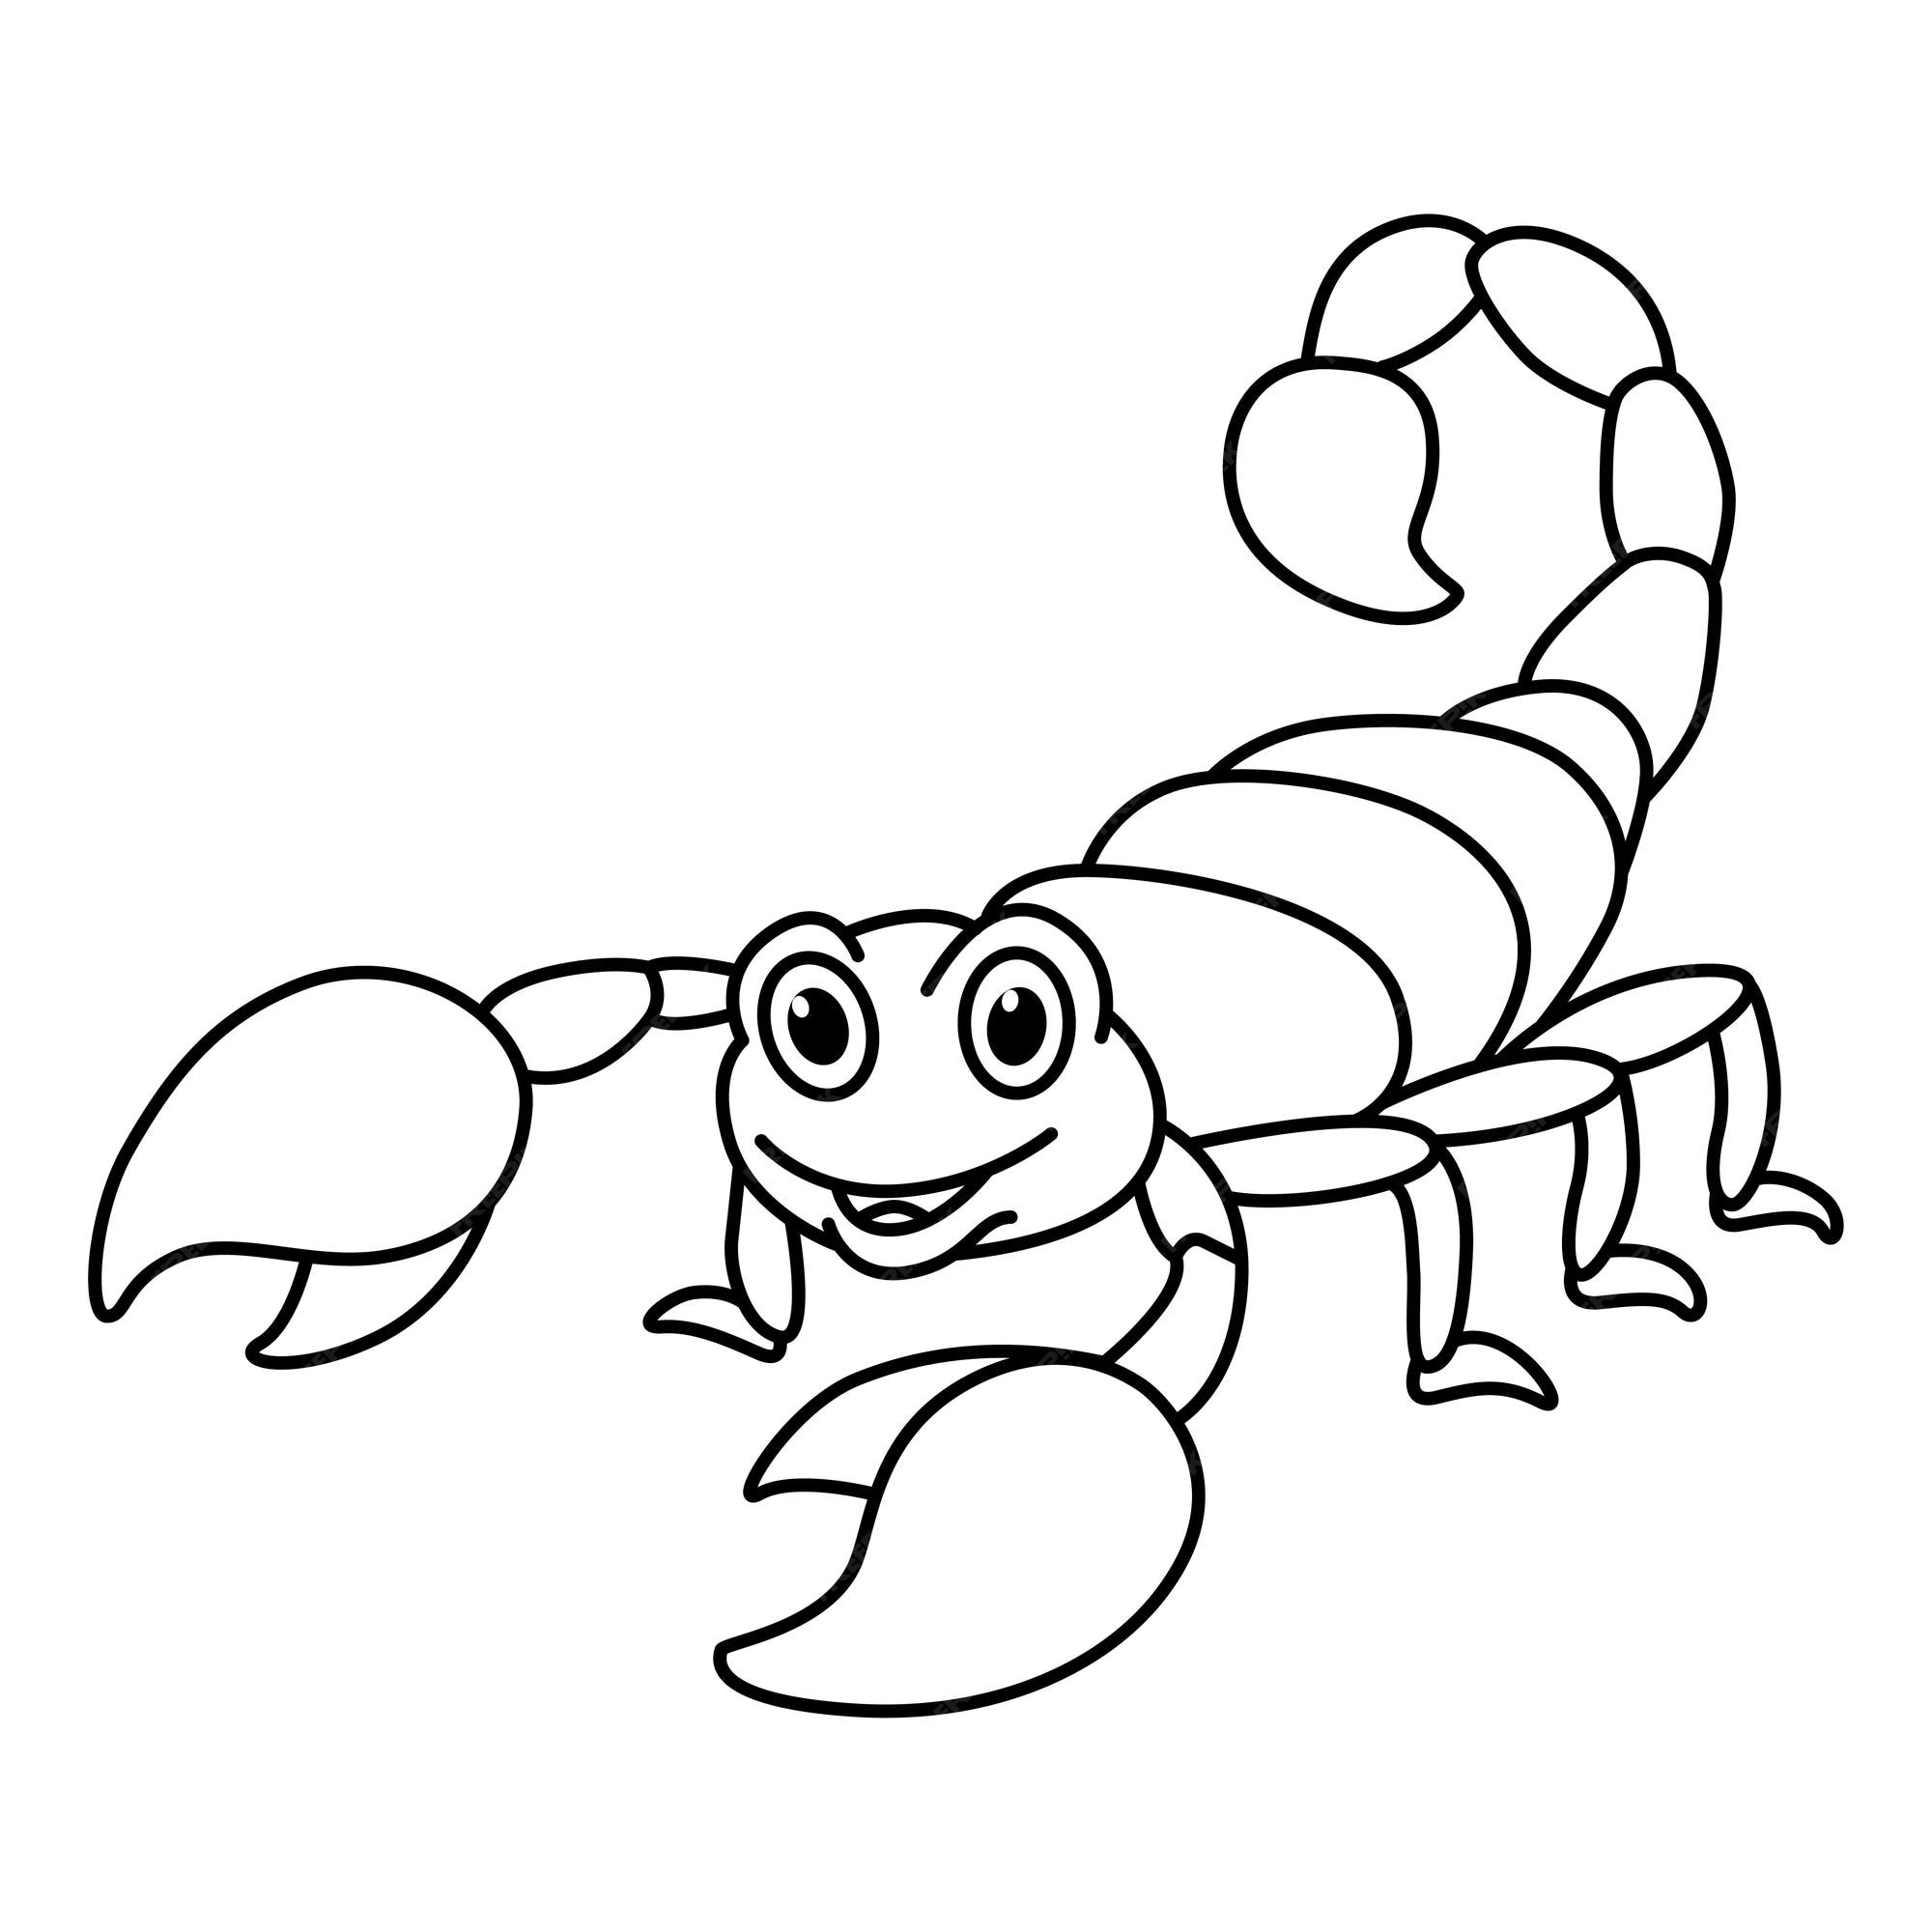 Premium vector cute scorpion cartoon characters vector illustration for kids coloring book